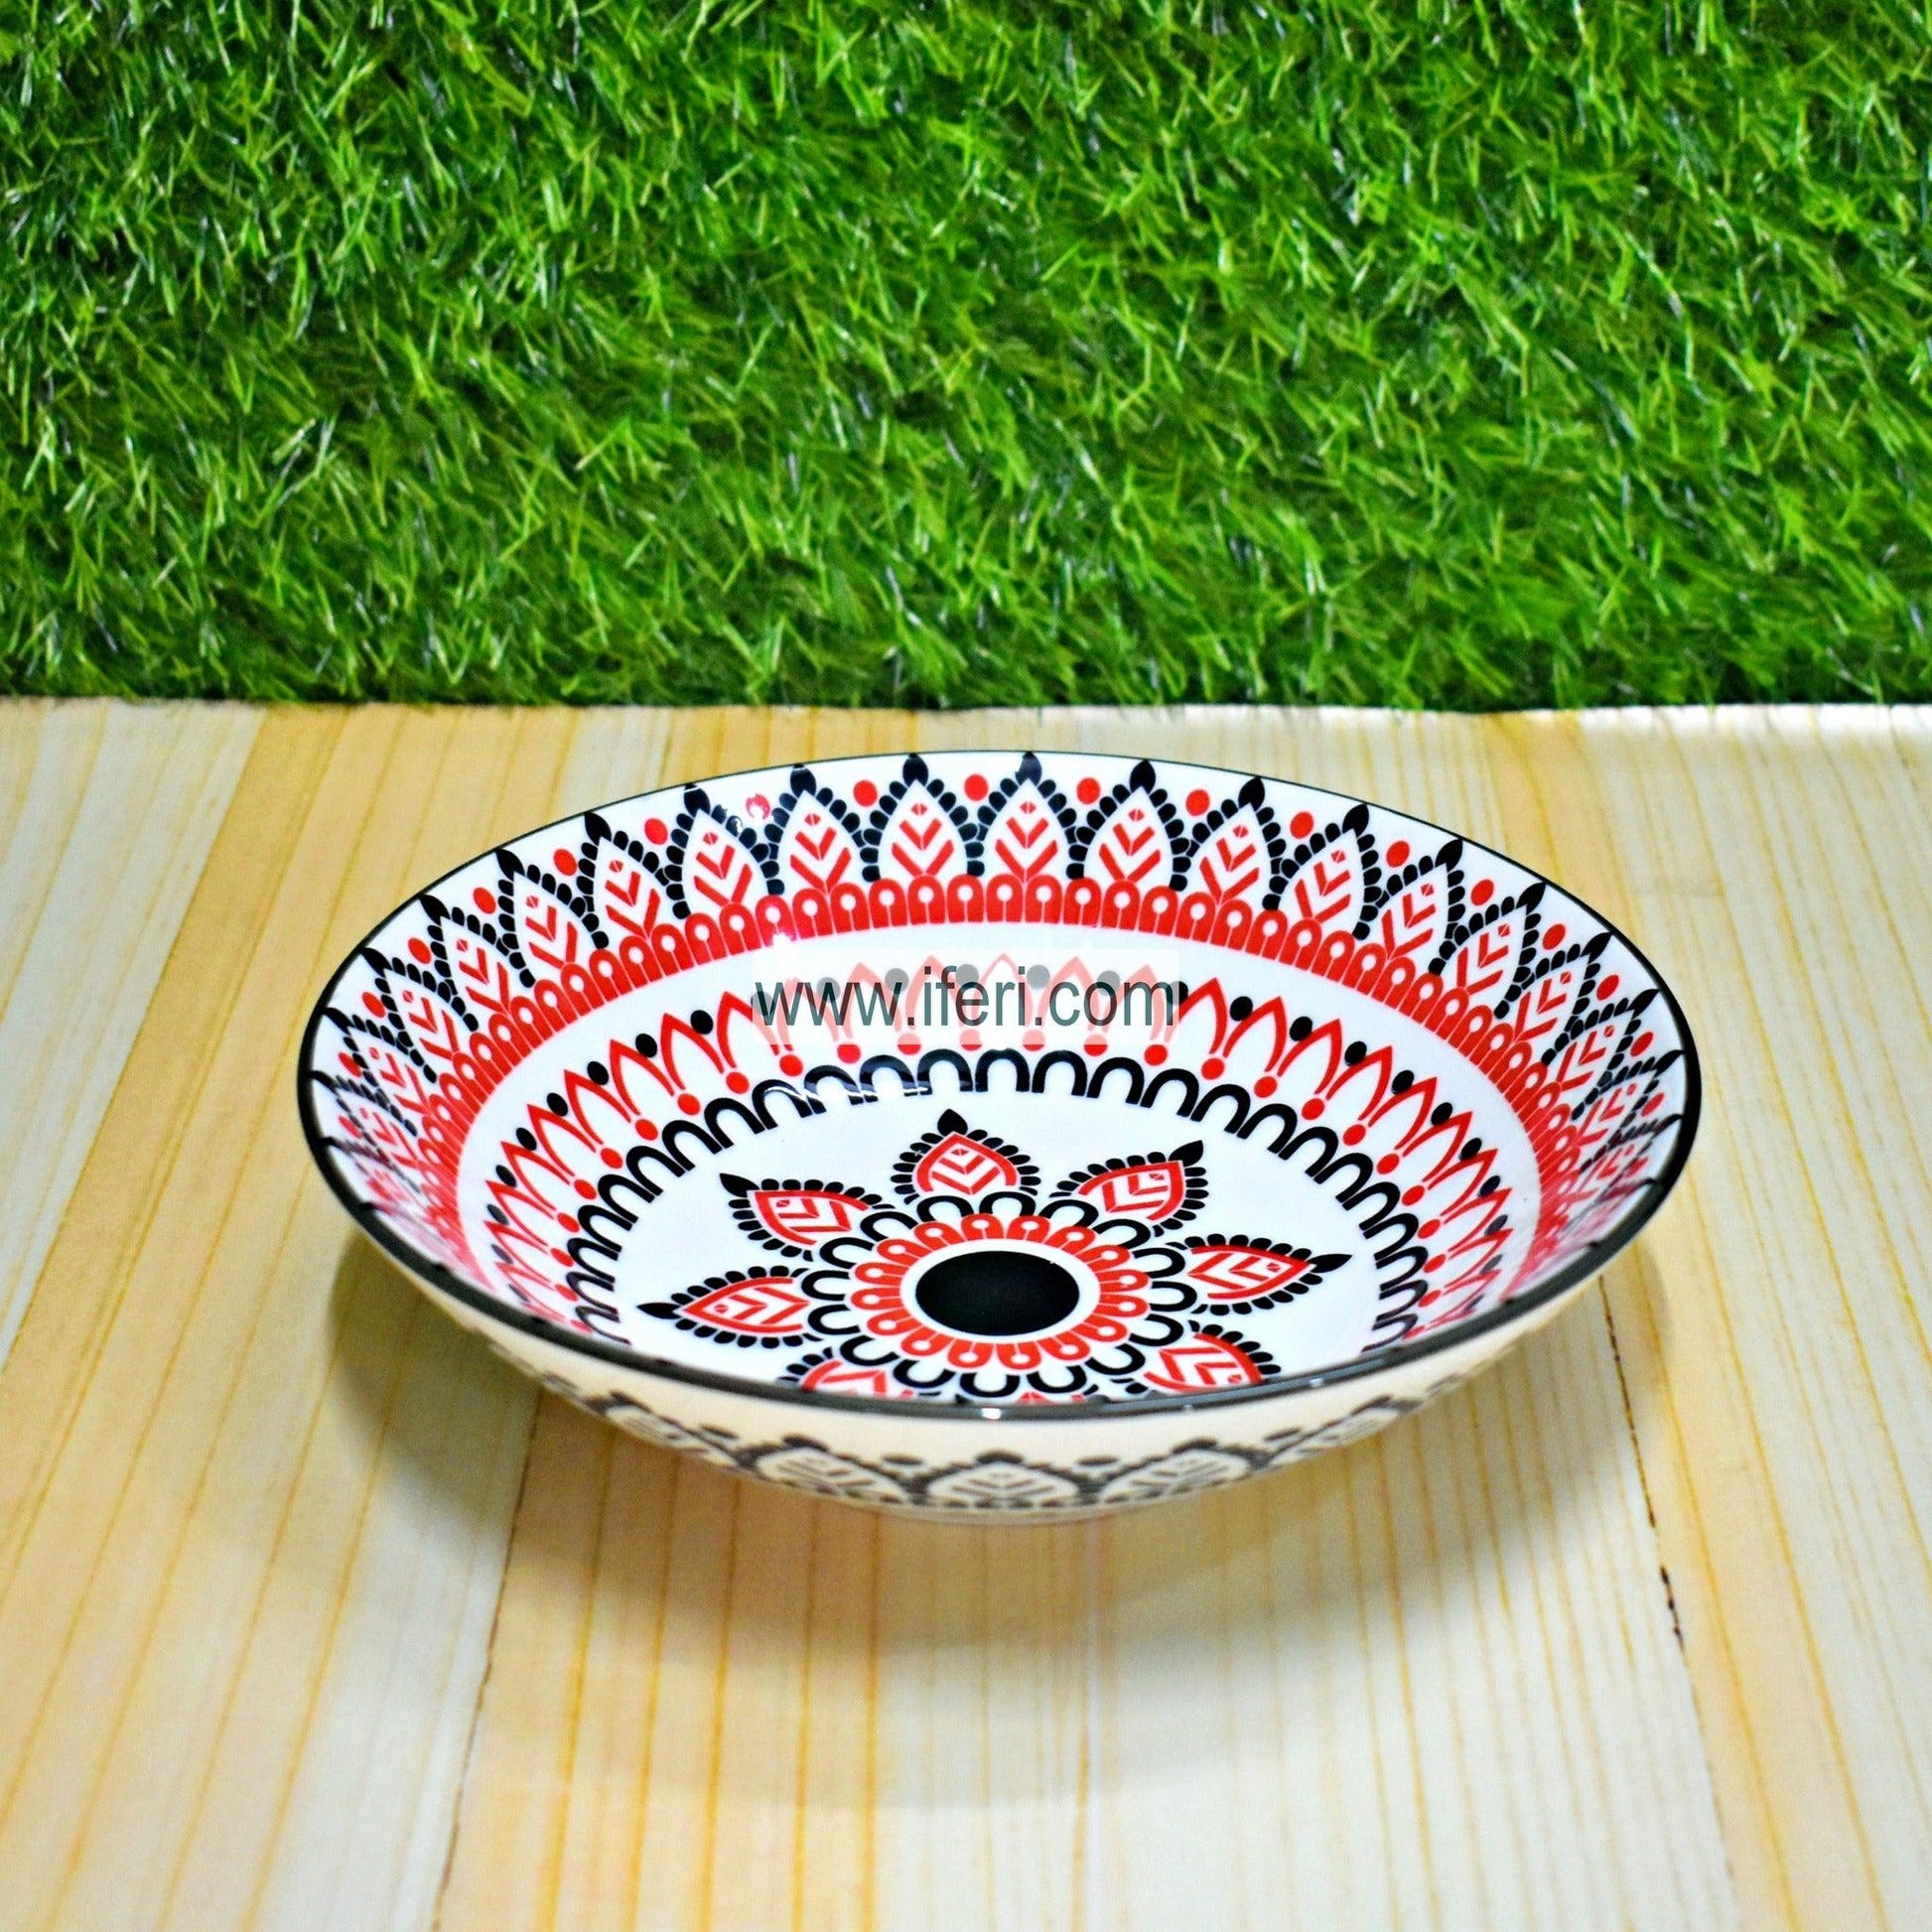 9 Inch Ceramic Curry Serving Dish SY0065 Price in Bangladesh - iferi.com